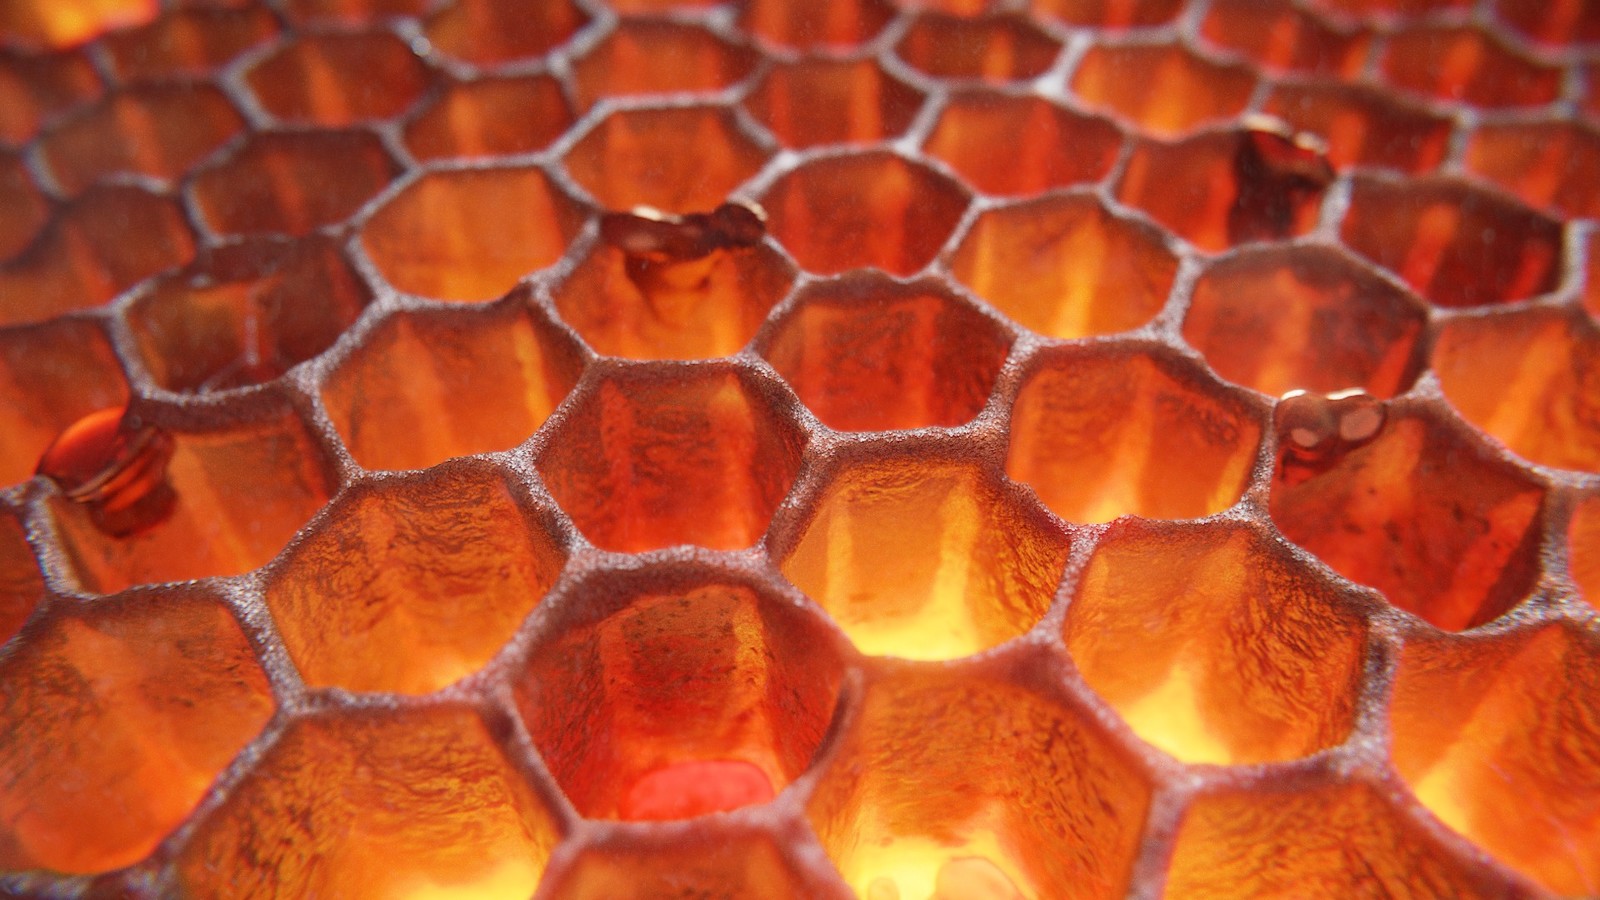 "Honeycomb" Final